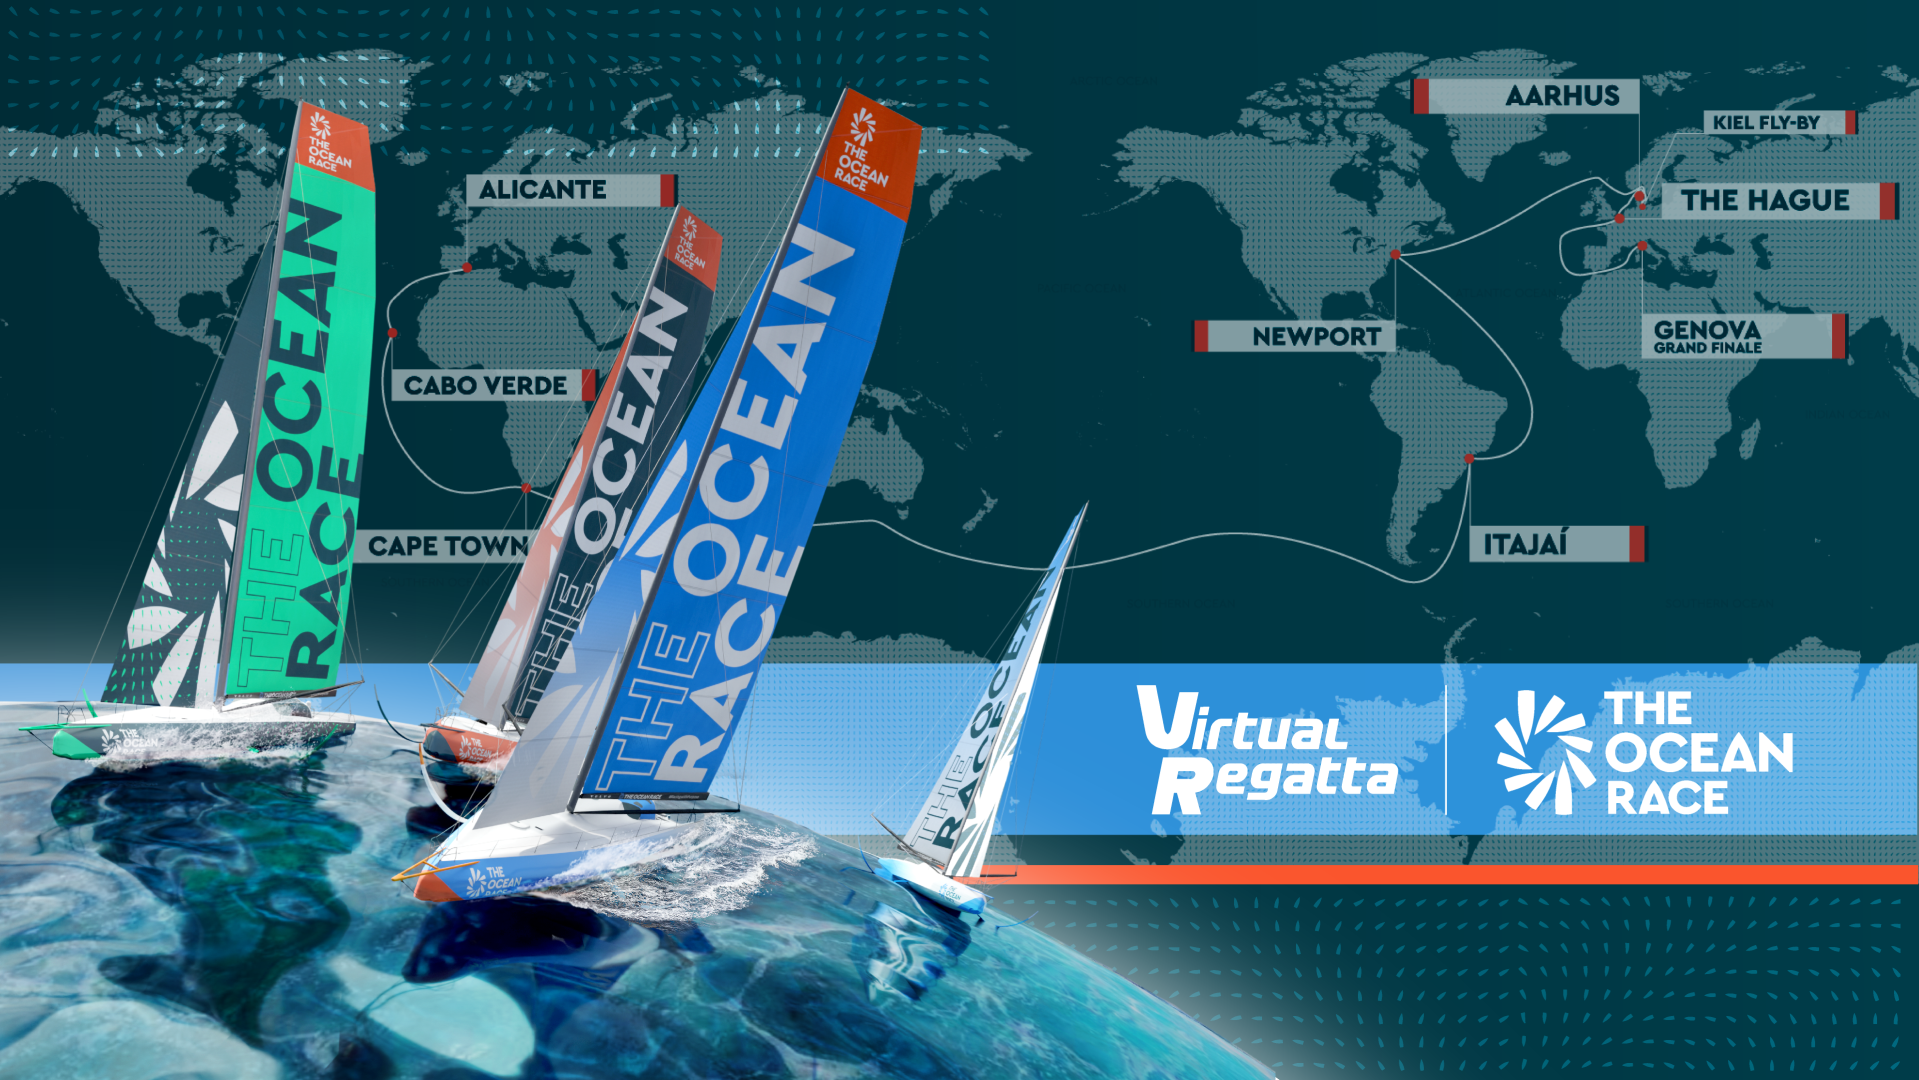 Virtual Regatta and The Ocean Race extend their partnership